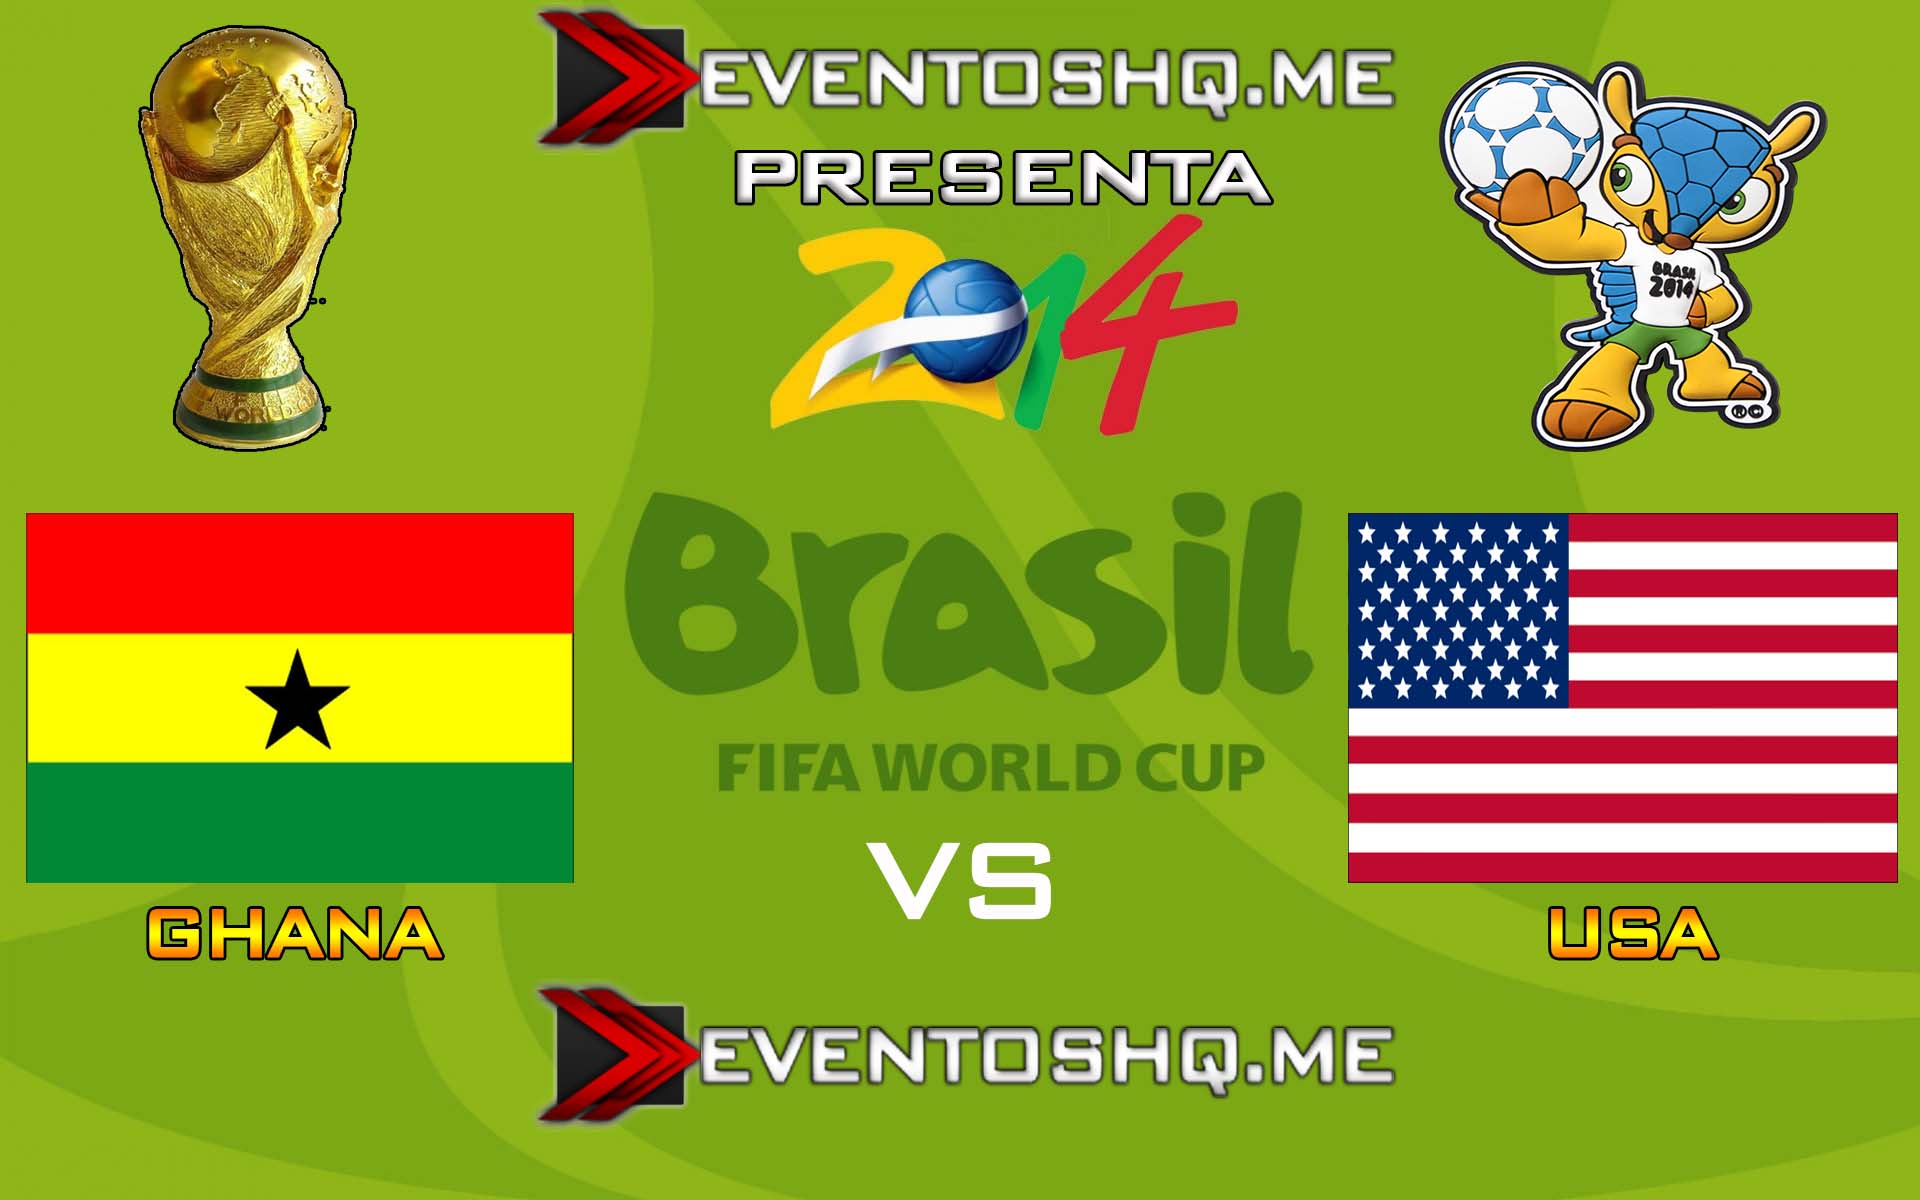 Ver en Vivo Ghana vs USA Mundial Brasil 2014 www.eventoshq.me